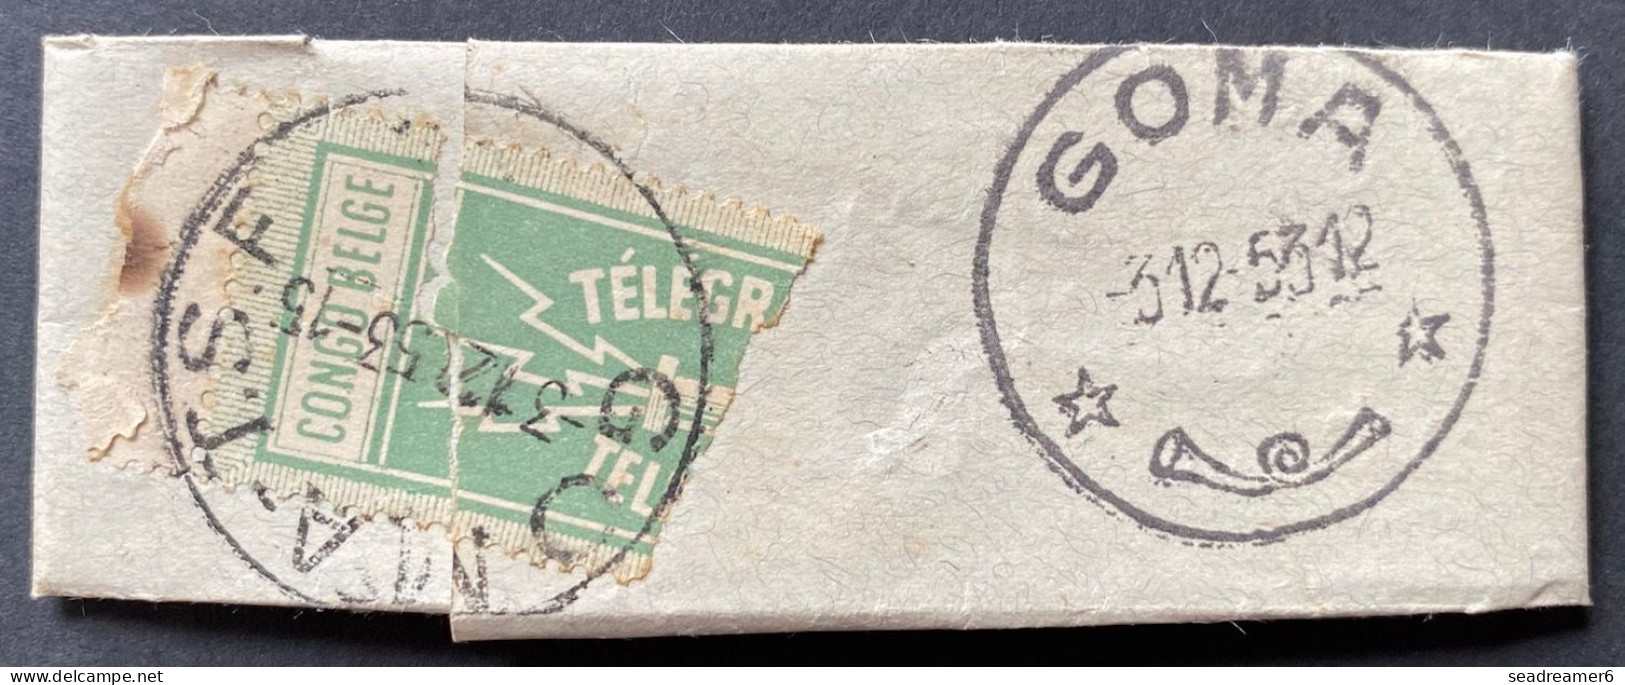 1953  TELEGRAMME De STANLEYVILLE  Type 2T Vert/gris Fermé Avec étiquette Bilingue "TELEGRAMME" Dateur De GOMA TSF RR - Telegrammen